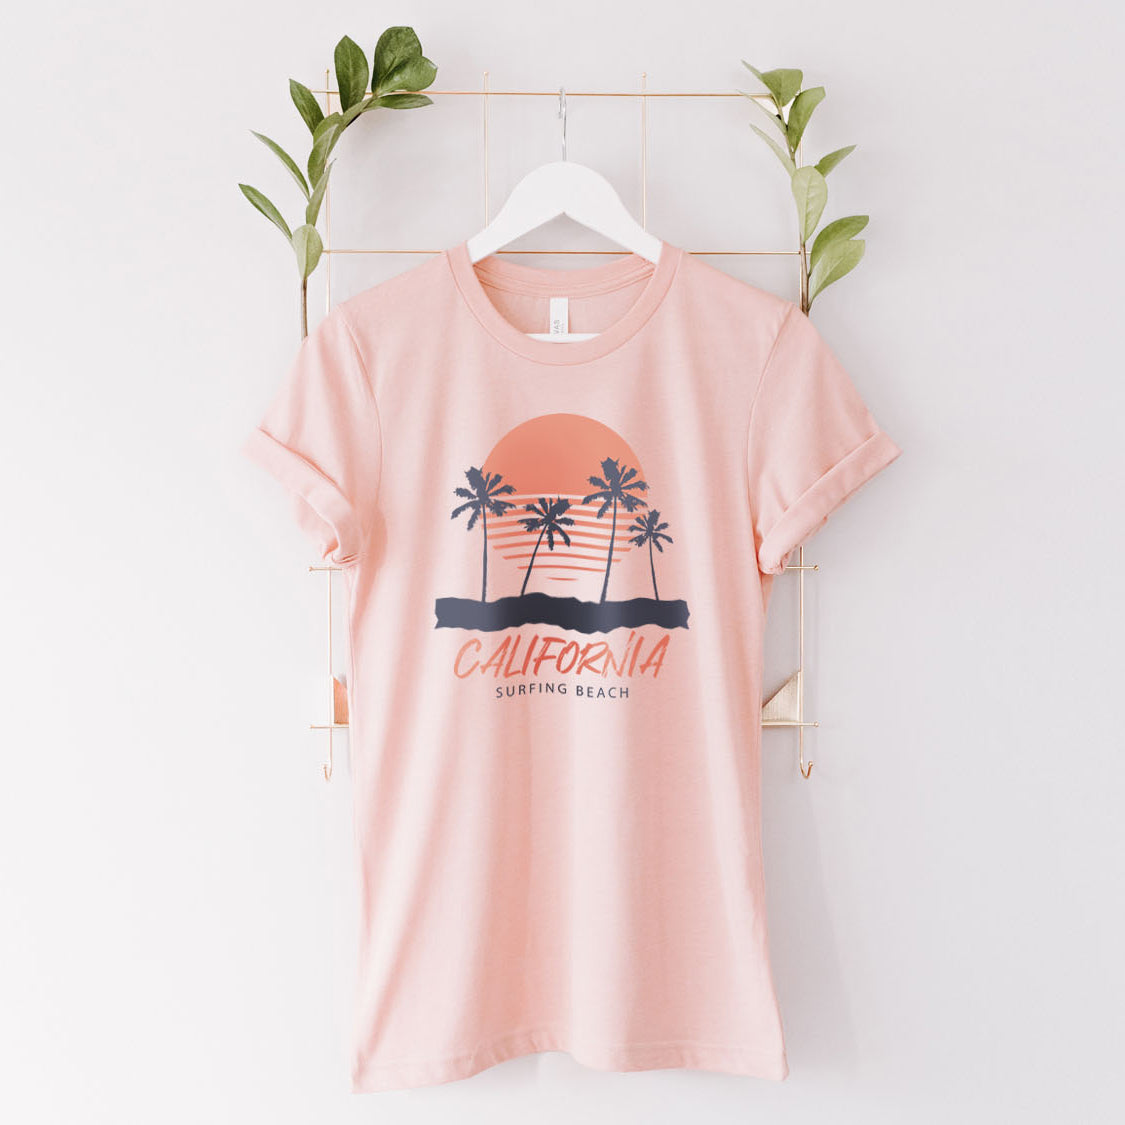 California Palm Tree Sunset Beach Surfing T-shirt - Beach Vibes California State Retro Vintage Design Printed Tee Shirt